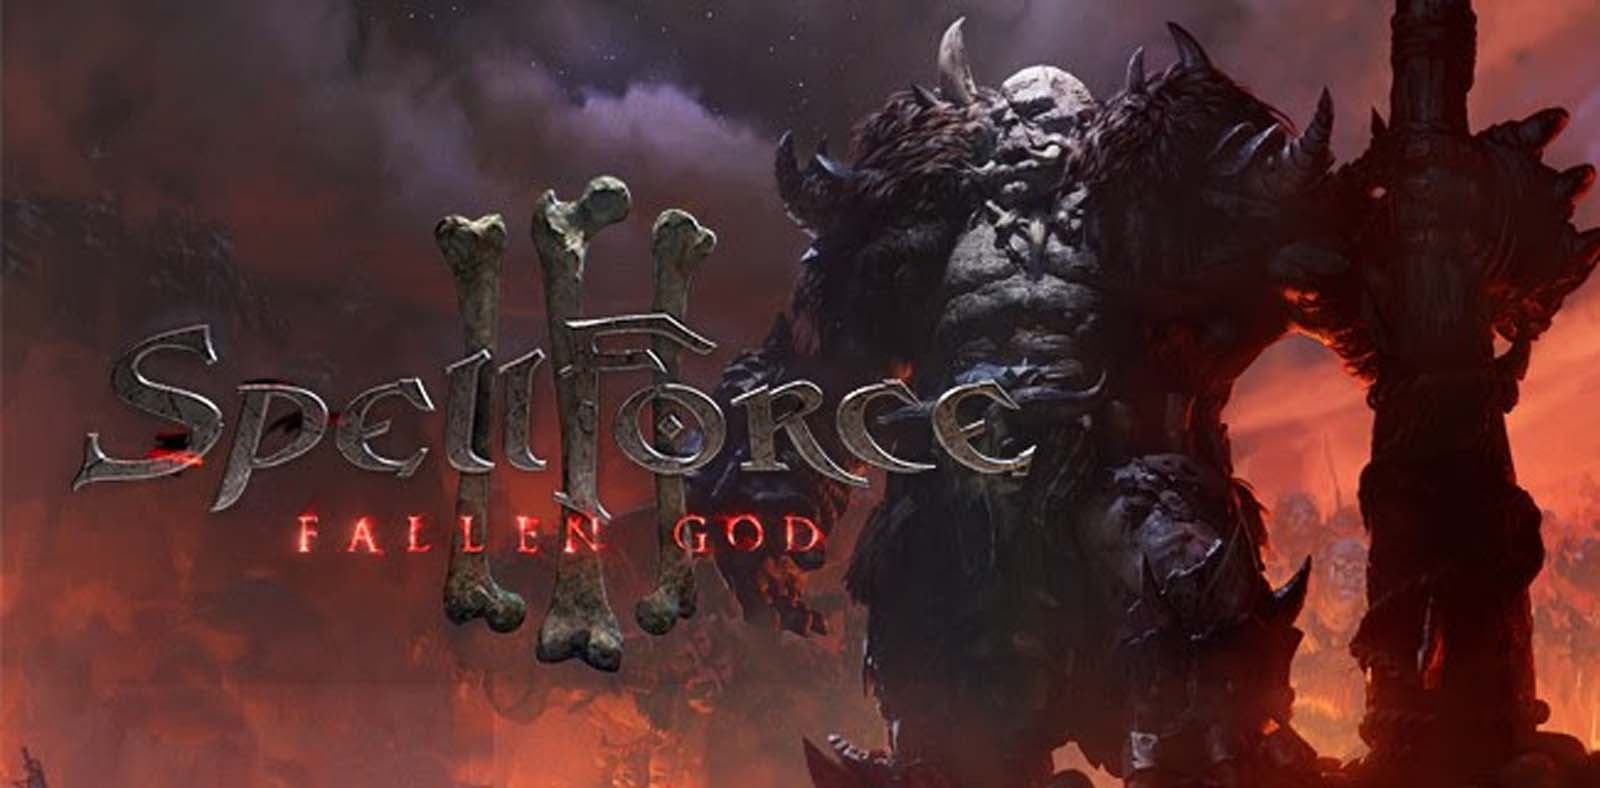 SpellForce 3: Fallen God for ios instal